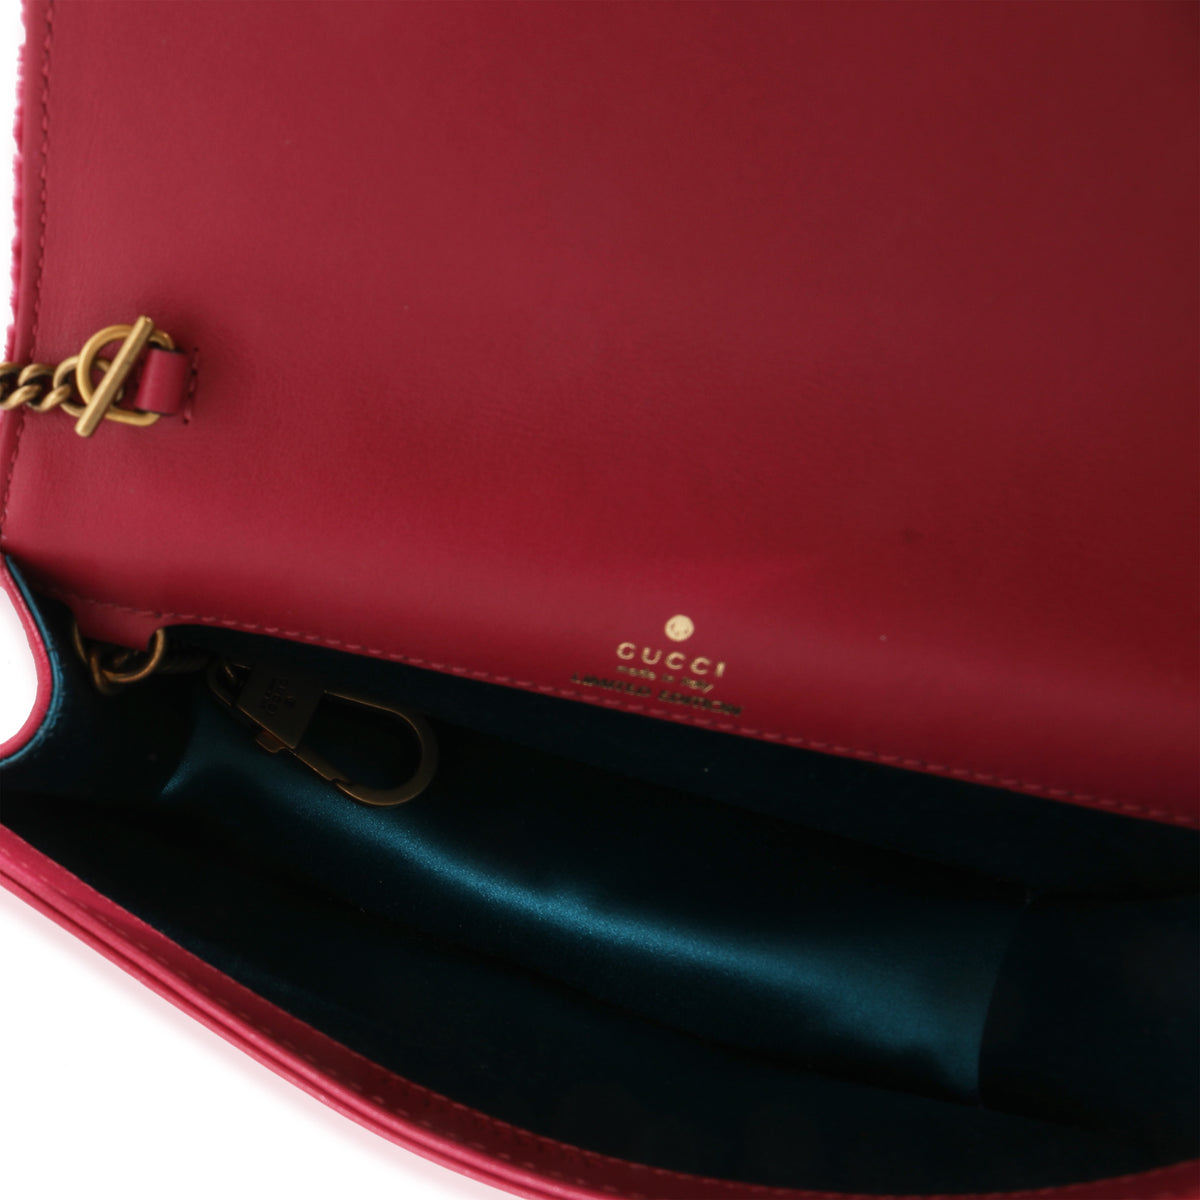 Gucci Pink Crystal & Sequin Heart Velvet Mini Marmont Bag